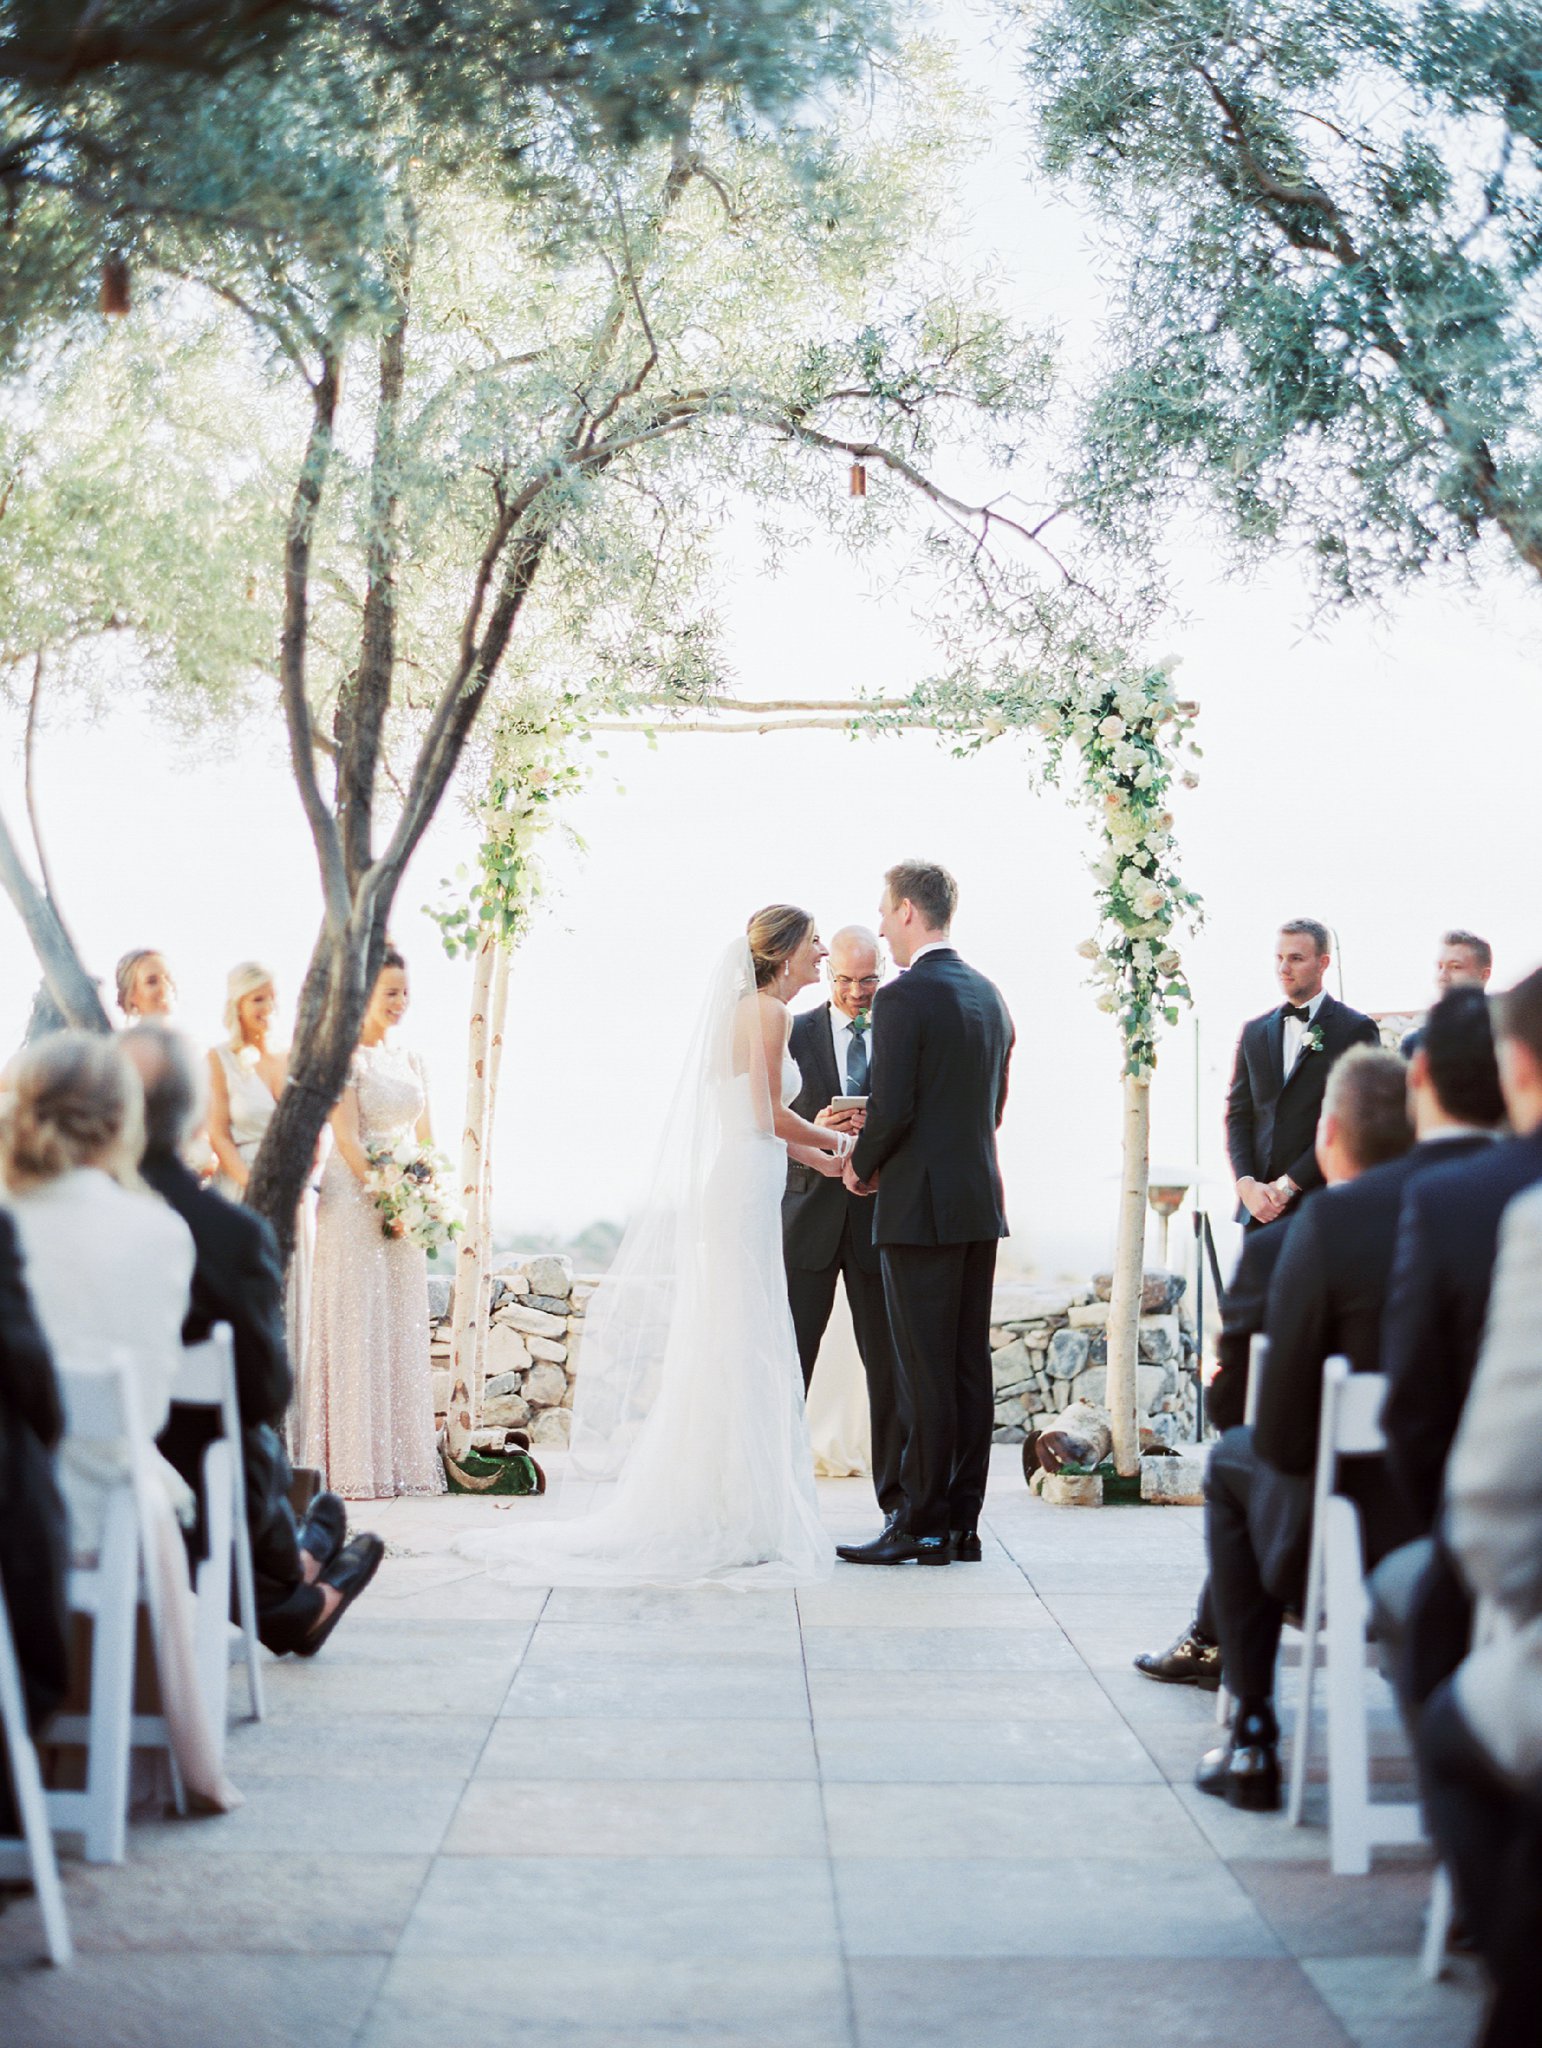 Desert Mountain Wedding – Nikki & Keenan | Rachel Solomon Photography Blog